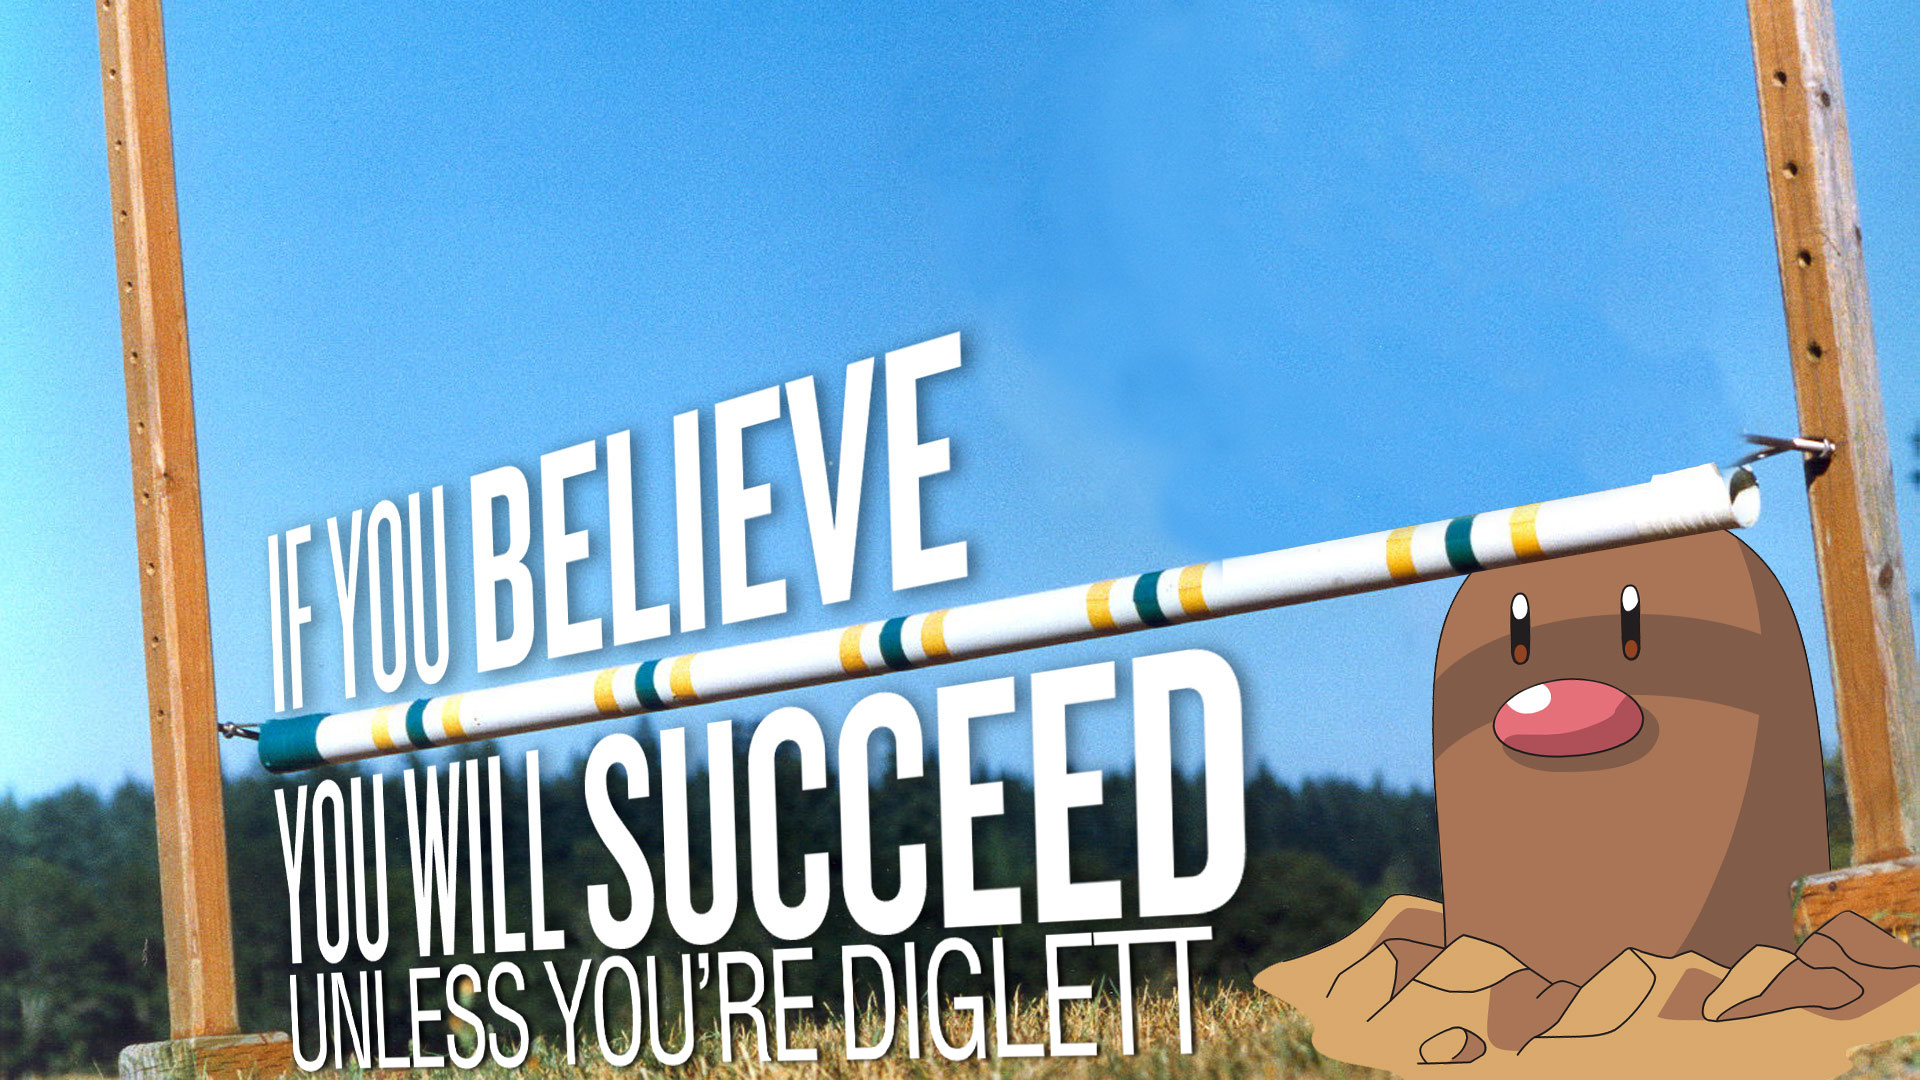 Diglett (Pokémon) HD Wallpaper and Background